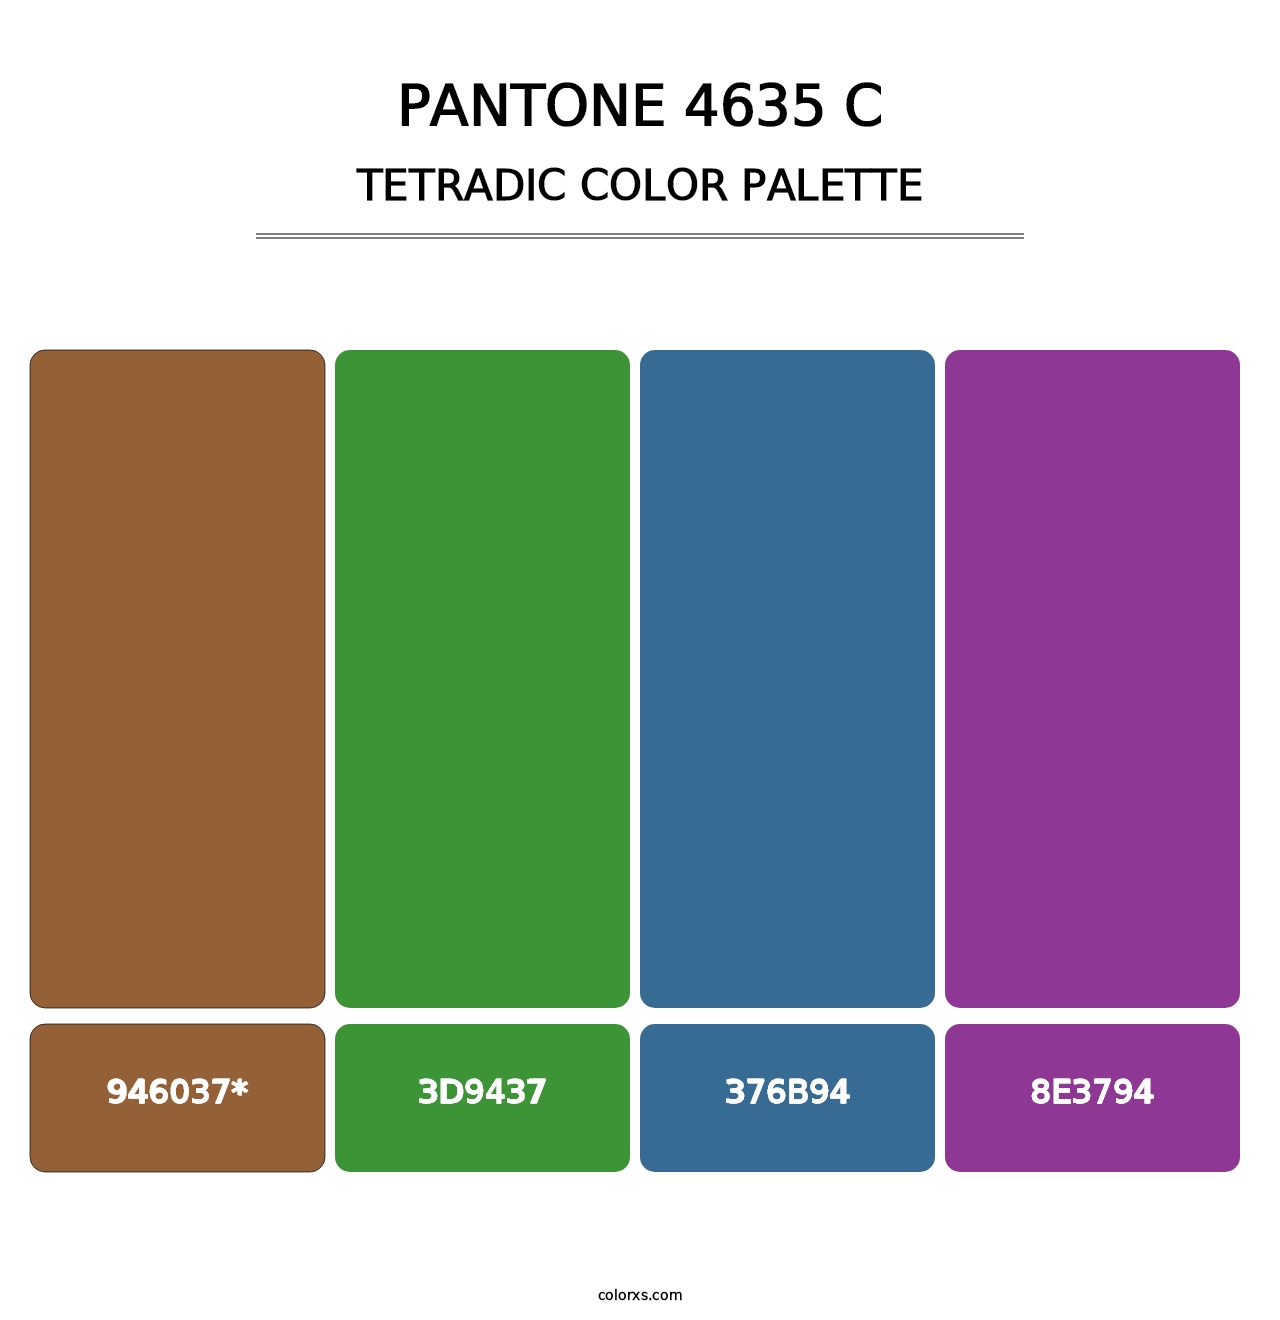 PANTONE 4635 C - Tetradic Color Palette